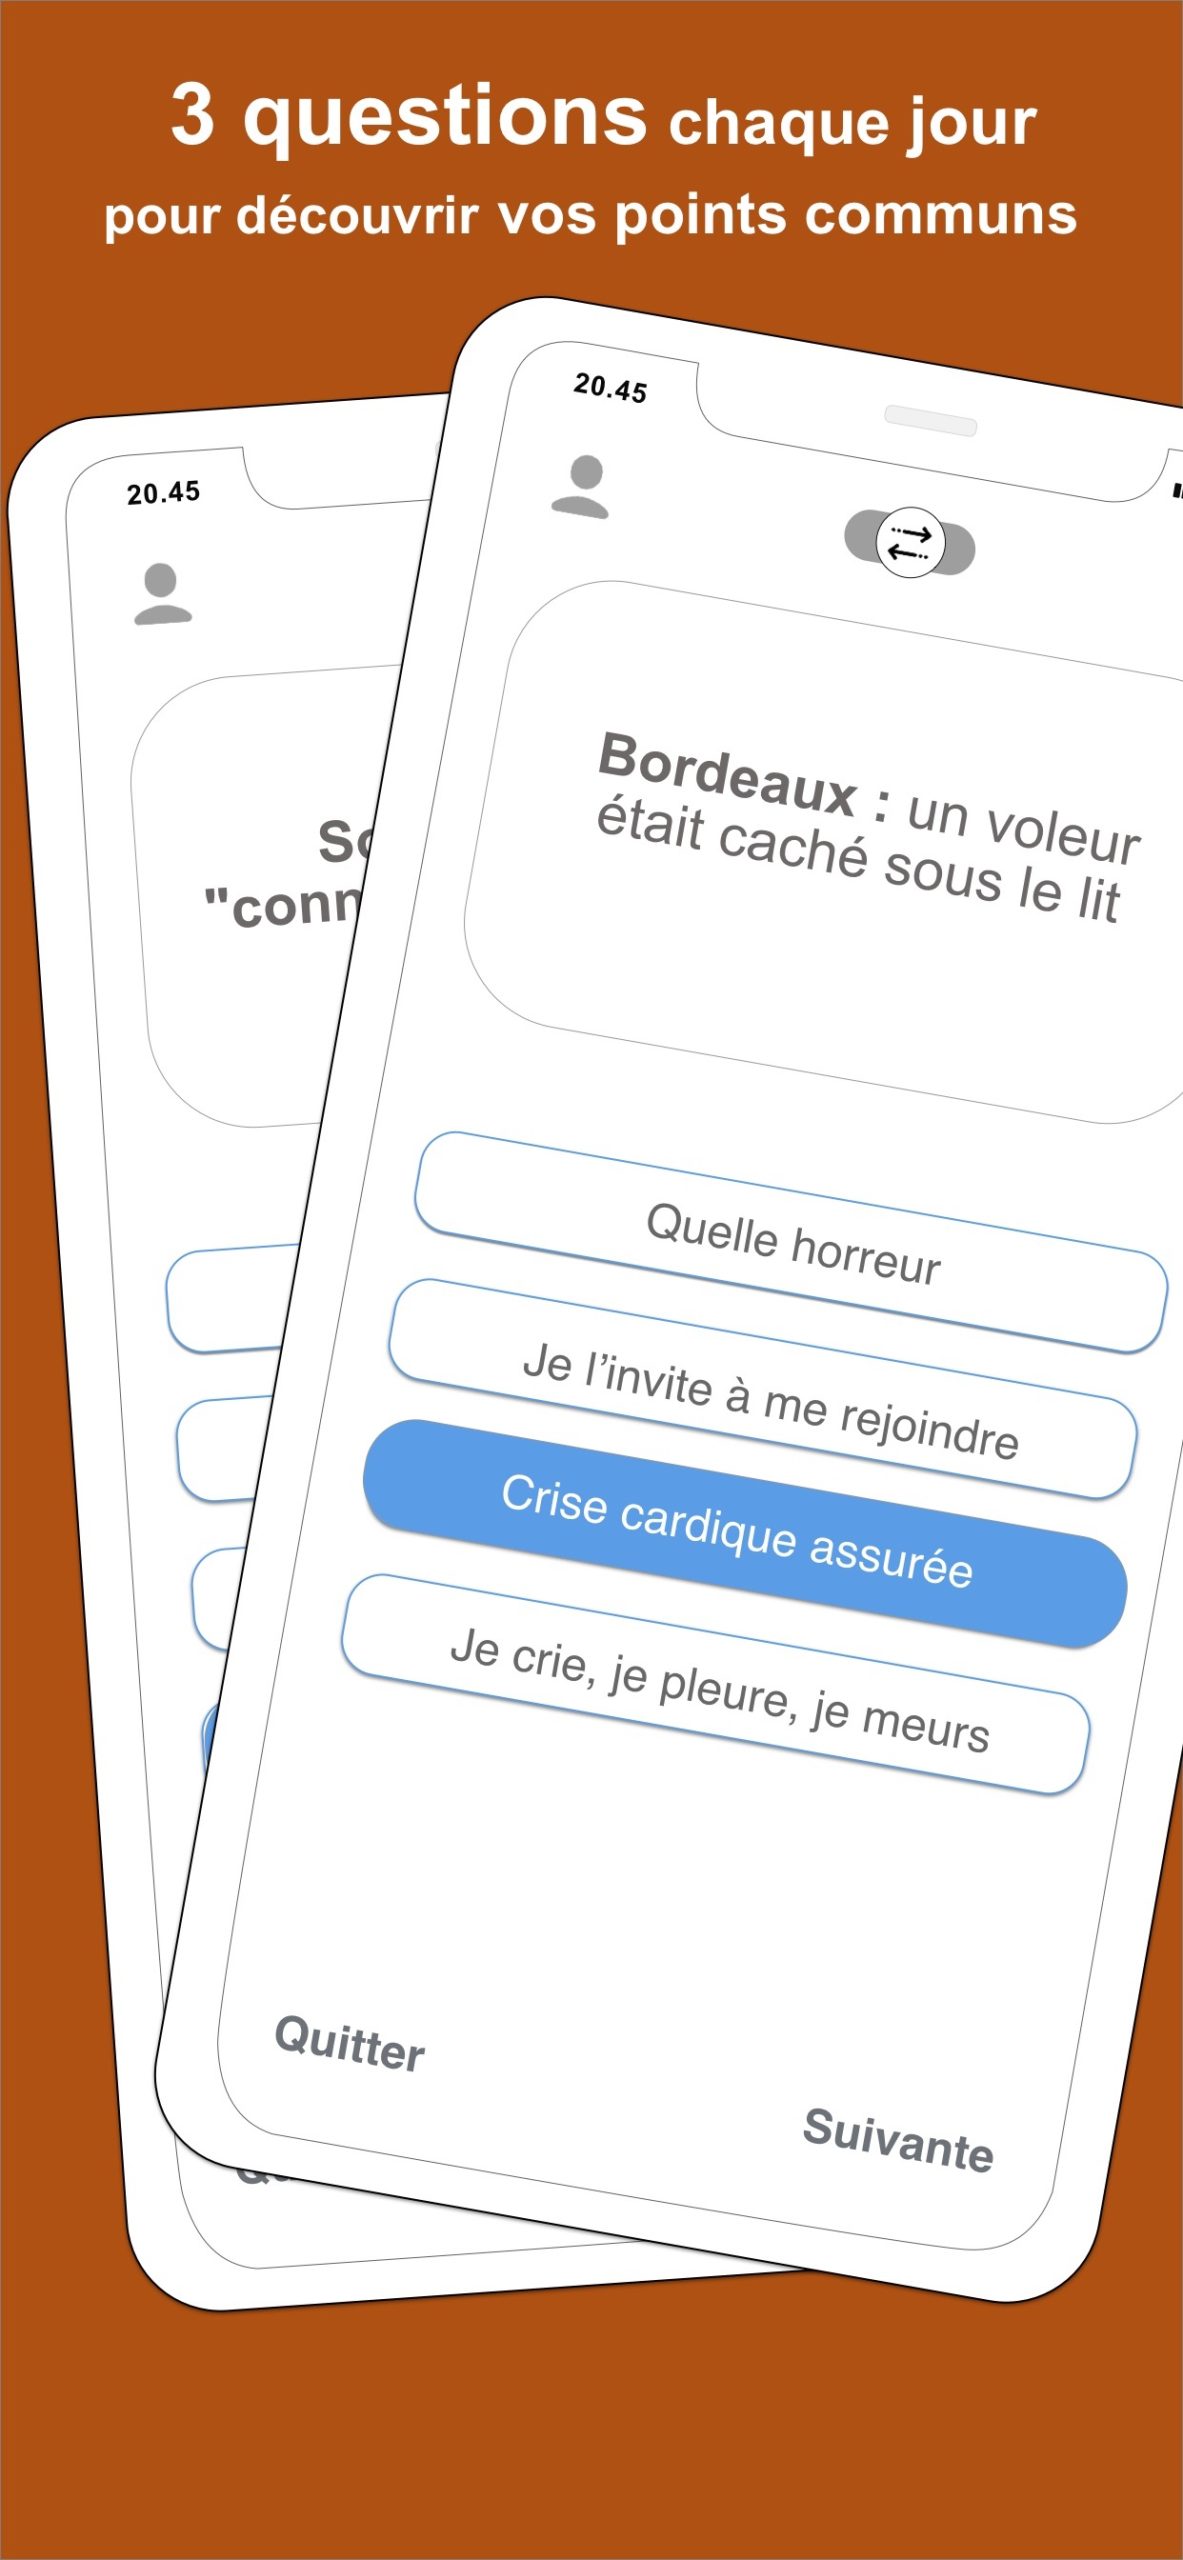 application-iphone-ios-apple-elyot-developpeur-freelance-bordeaux-7